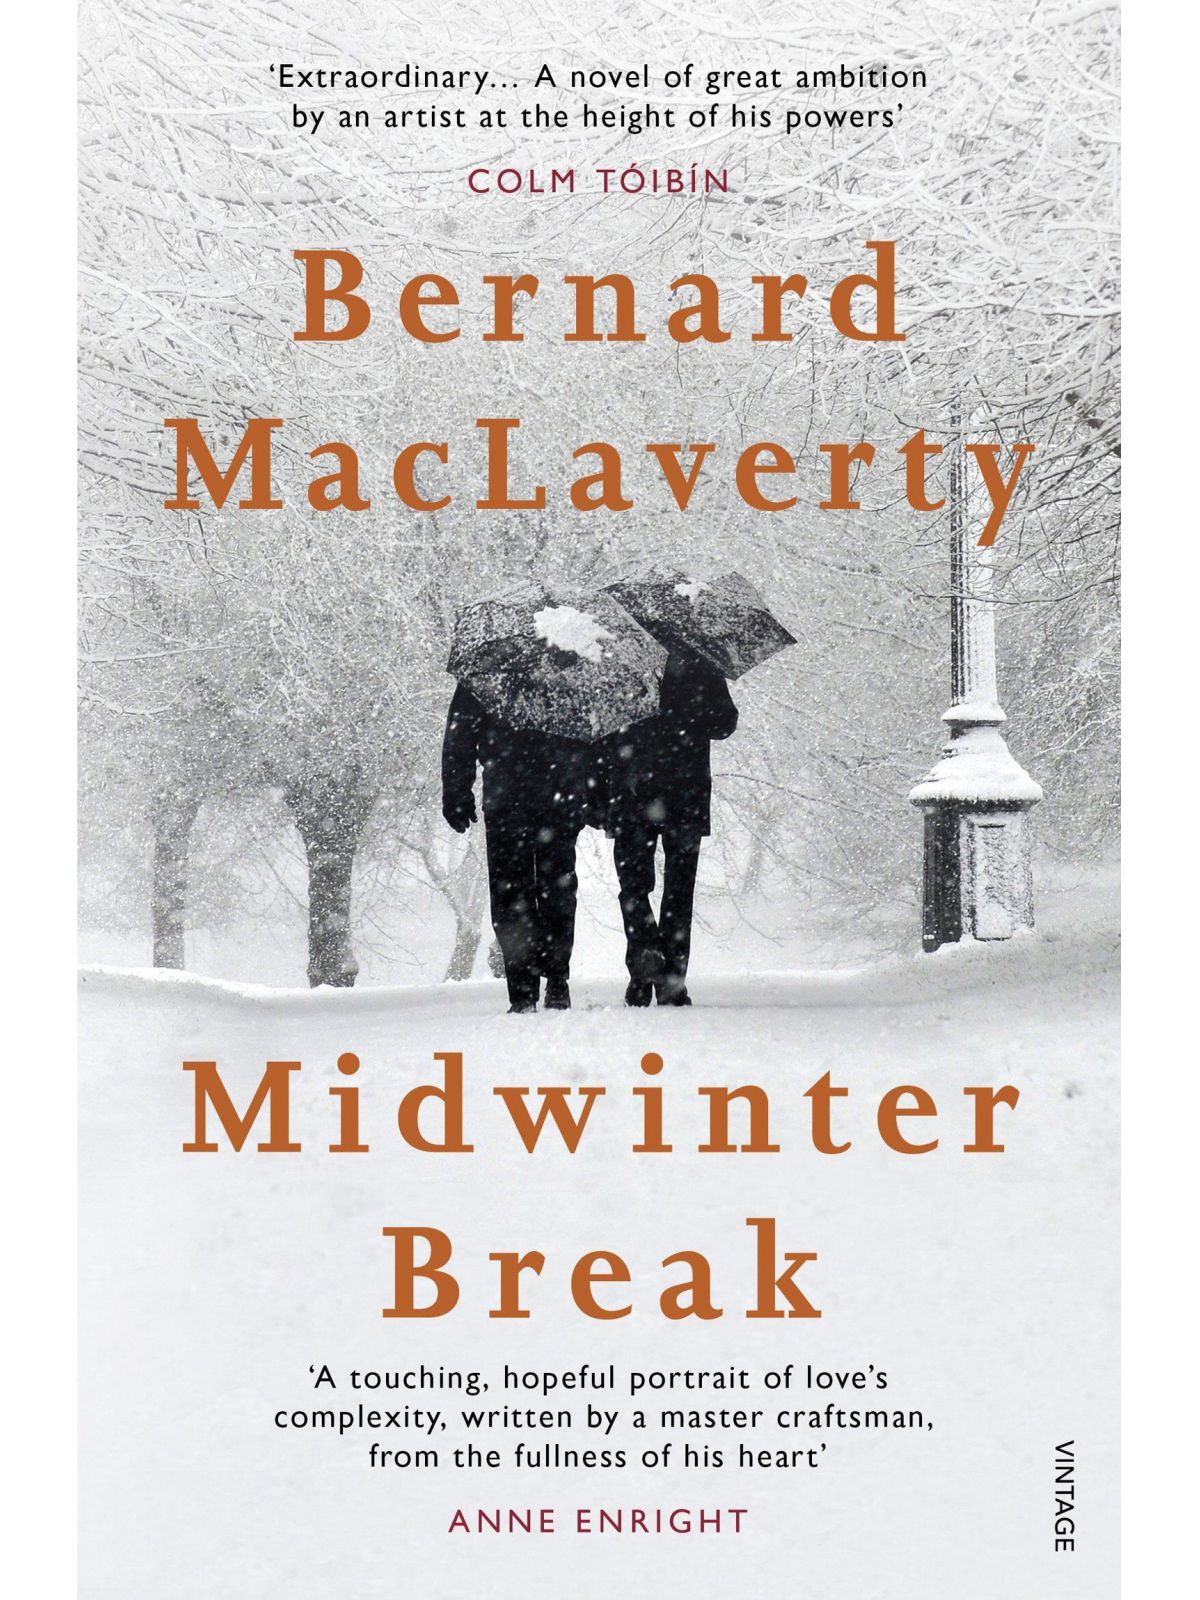 MIDWINTER BREAK MACLAVERTY, BERNARD Купить Книгу на Английском